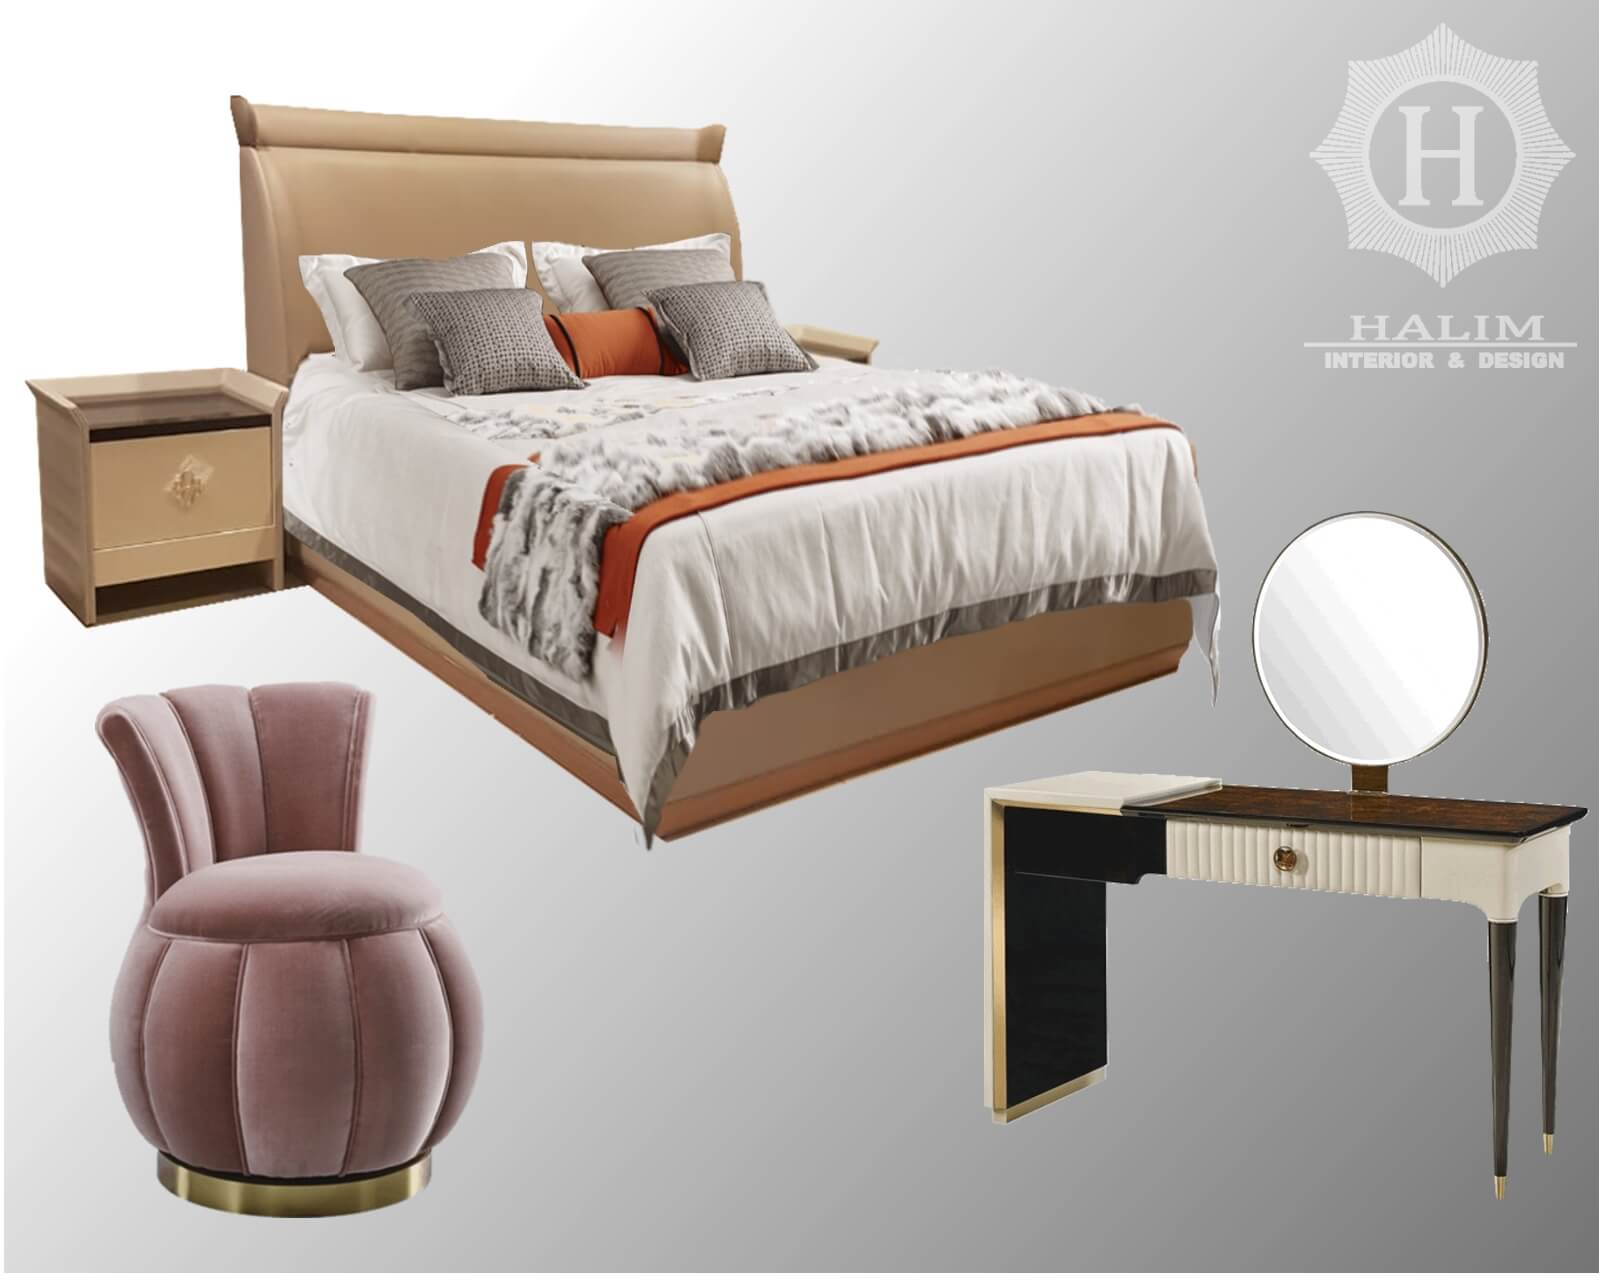 Halim Interior modern furniture contemporer american style minimalist european classic surabaya BED 5 1